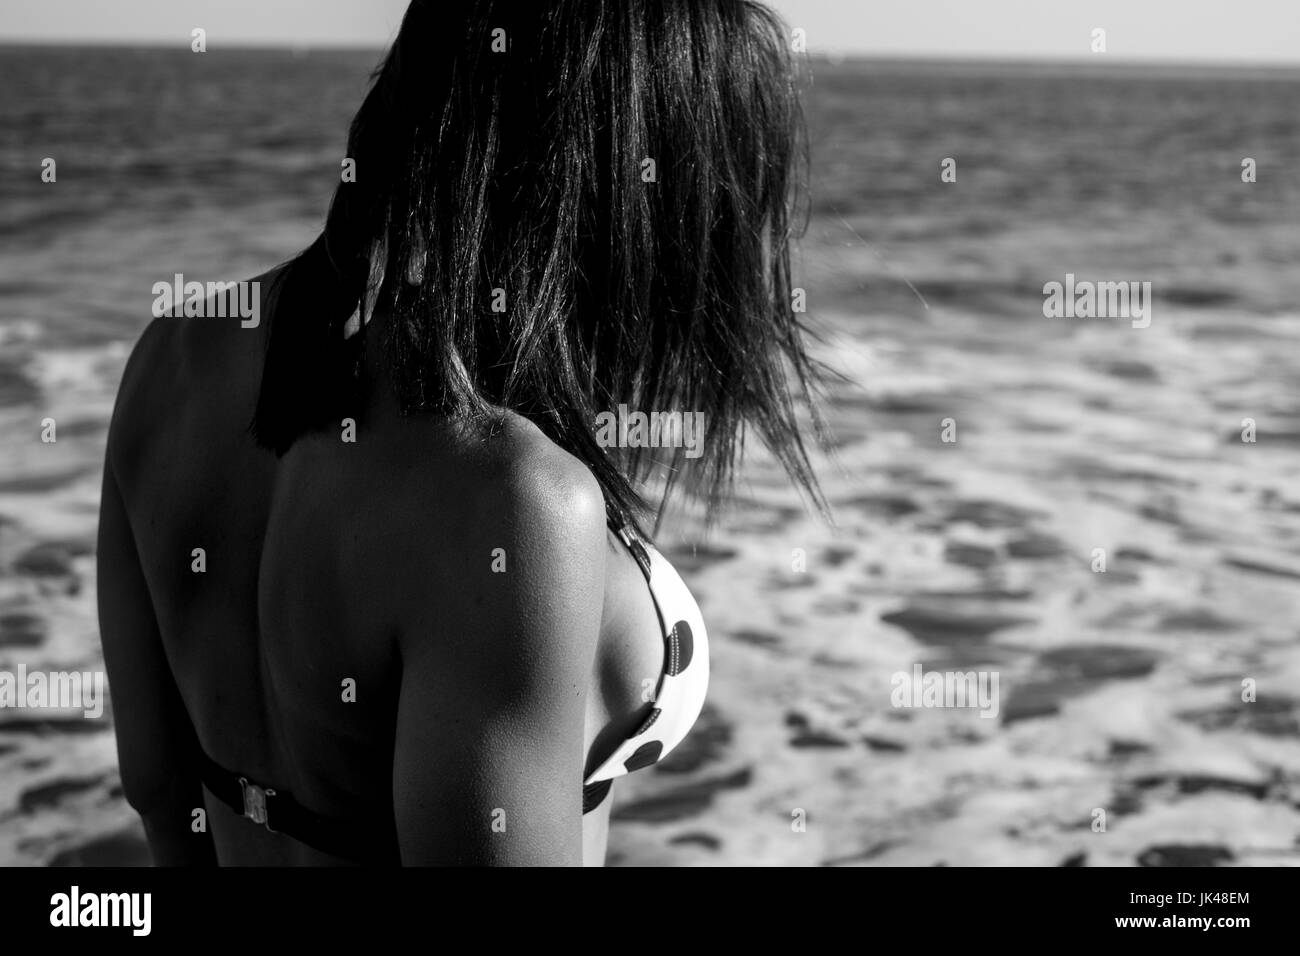 Bikini beach Black and White Stock Photos and Images